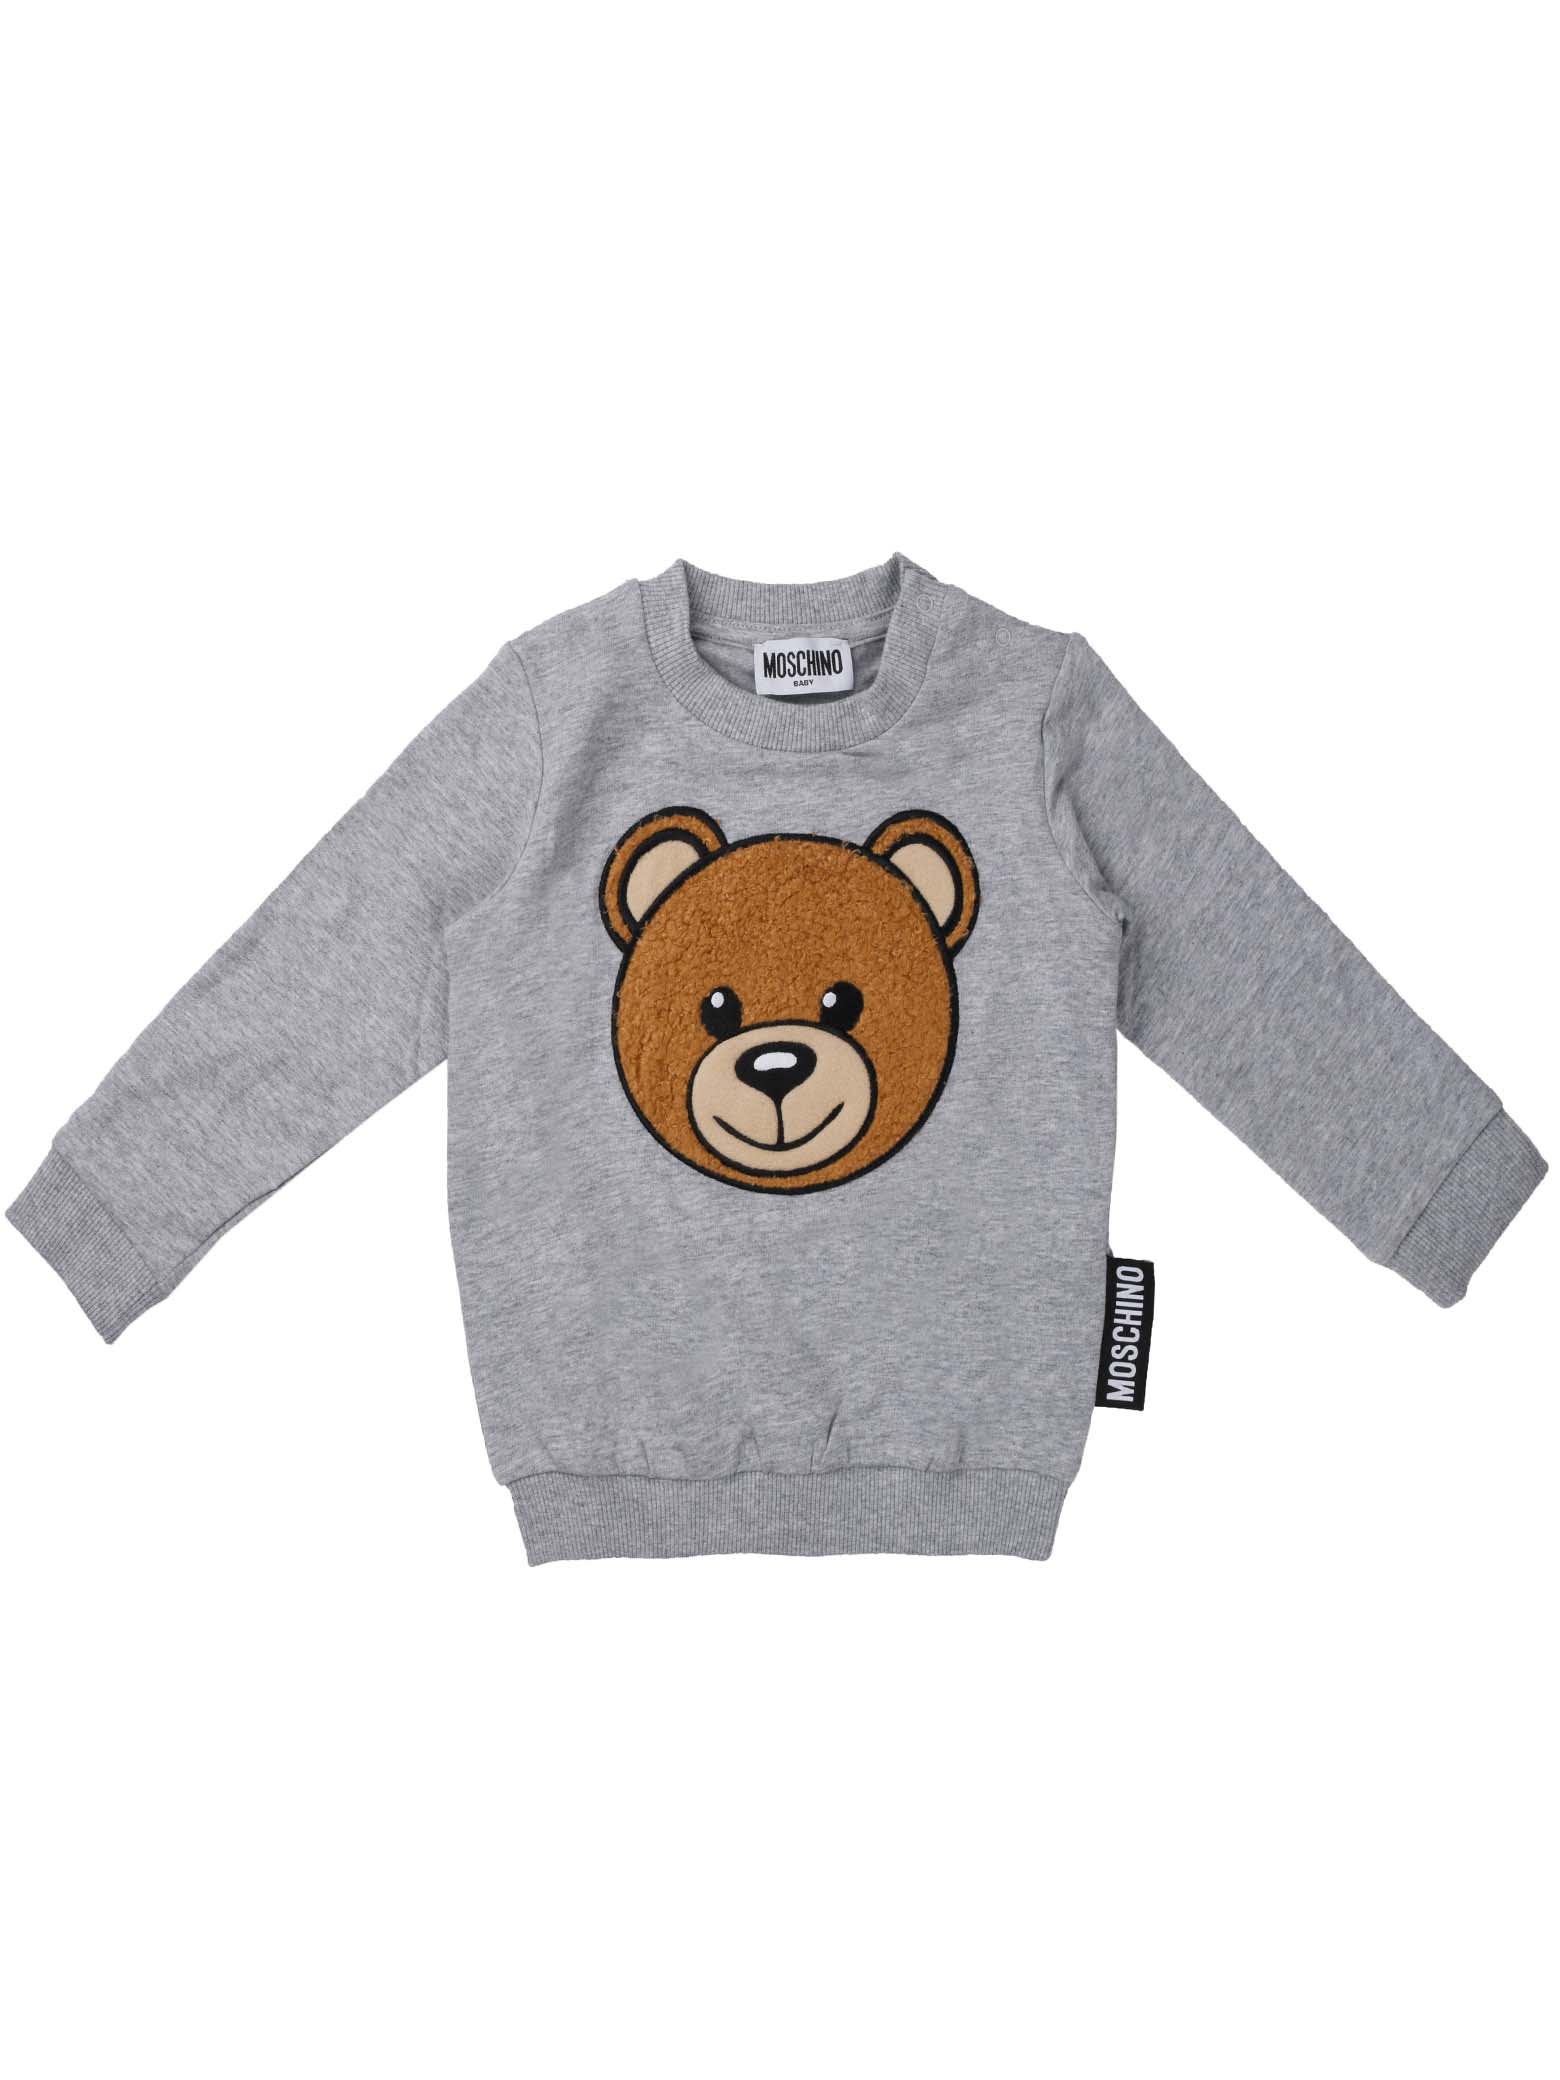 Moschino Gray Crew Neck Sweatshirt With Bear